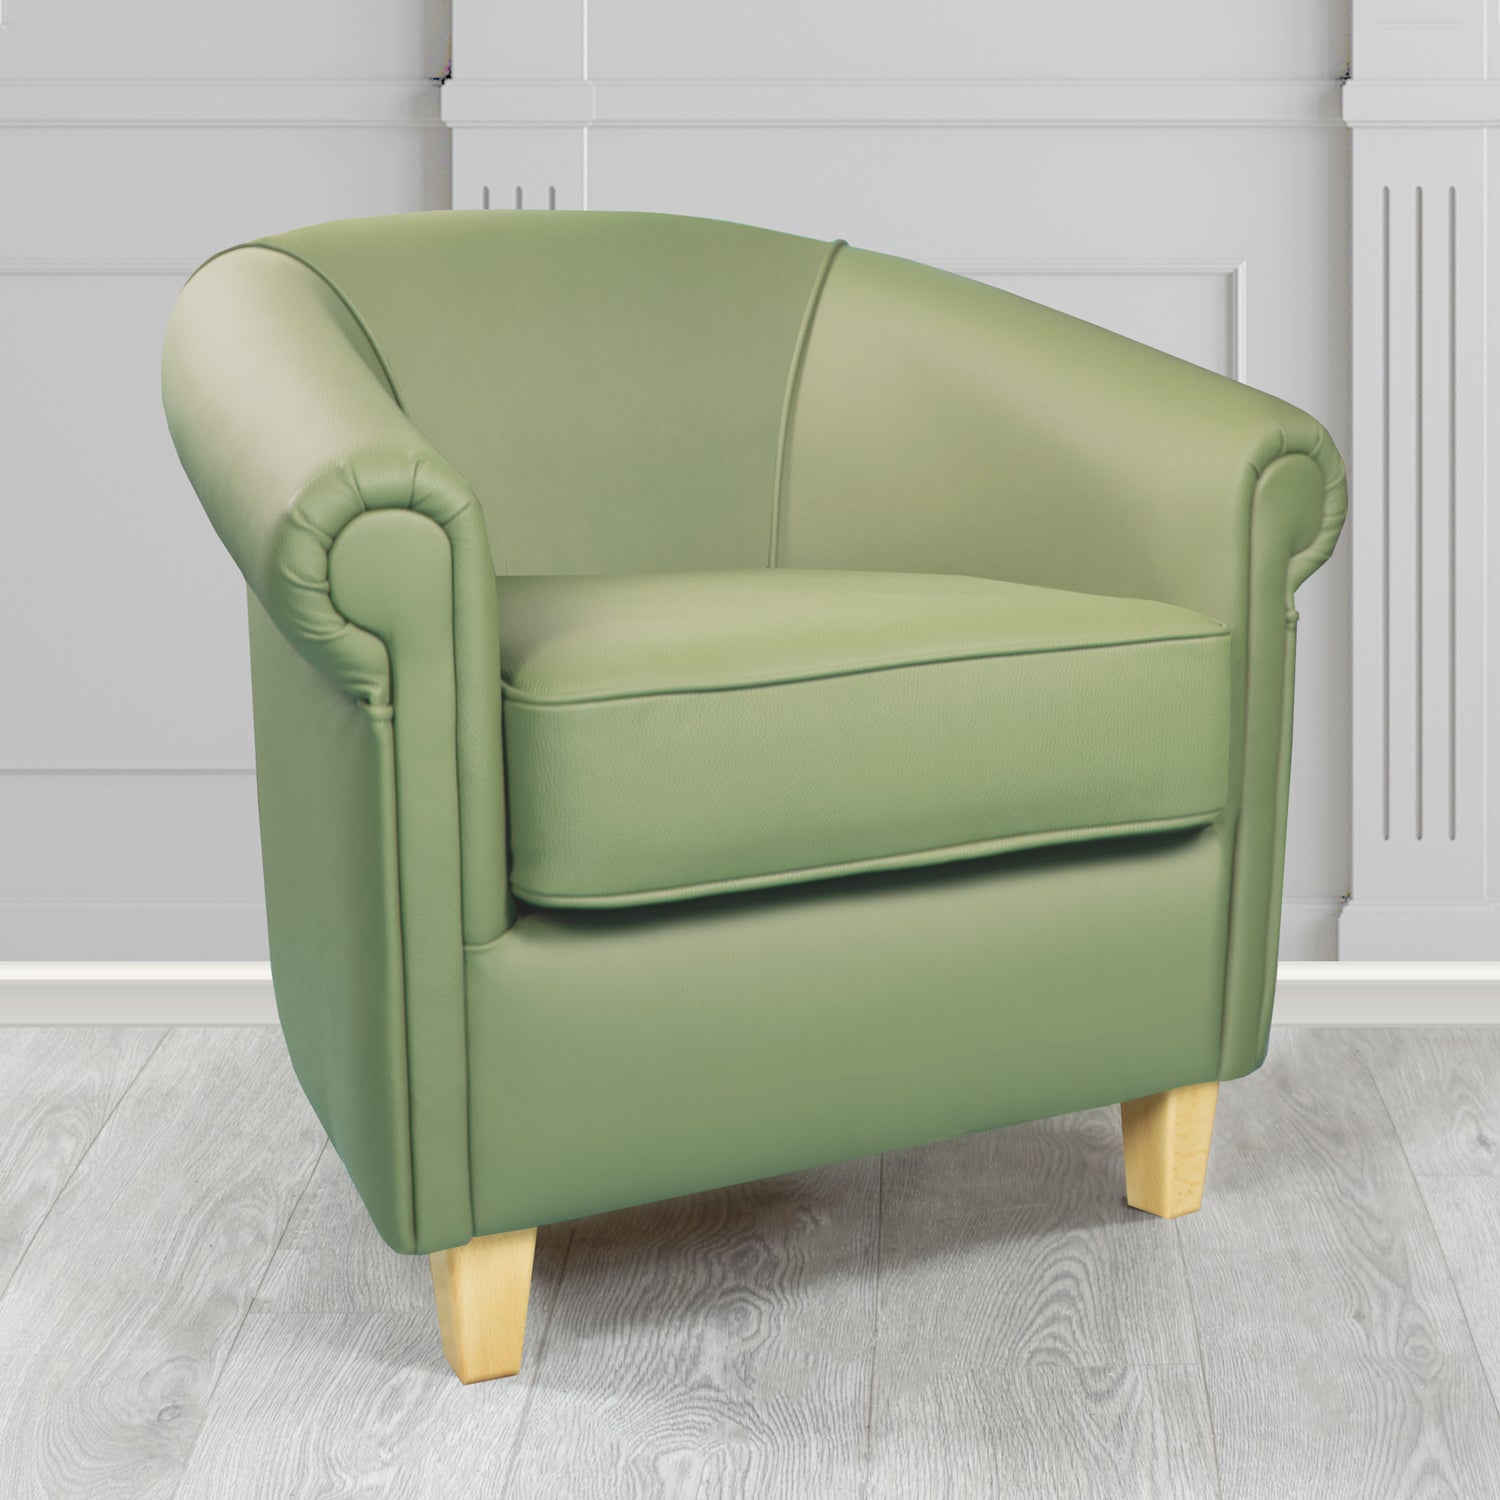 Siena Tub Chair in Crib 5 Shelly Thyme Green Genuine Leather - The Tub Chair Shop